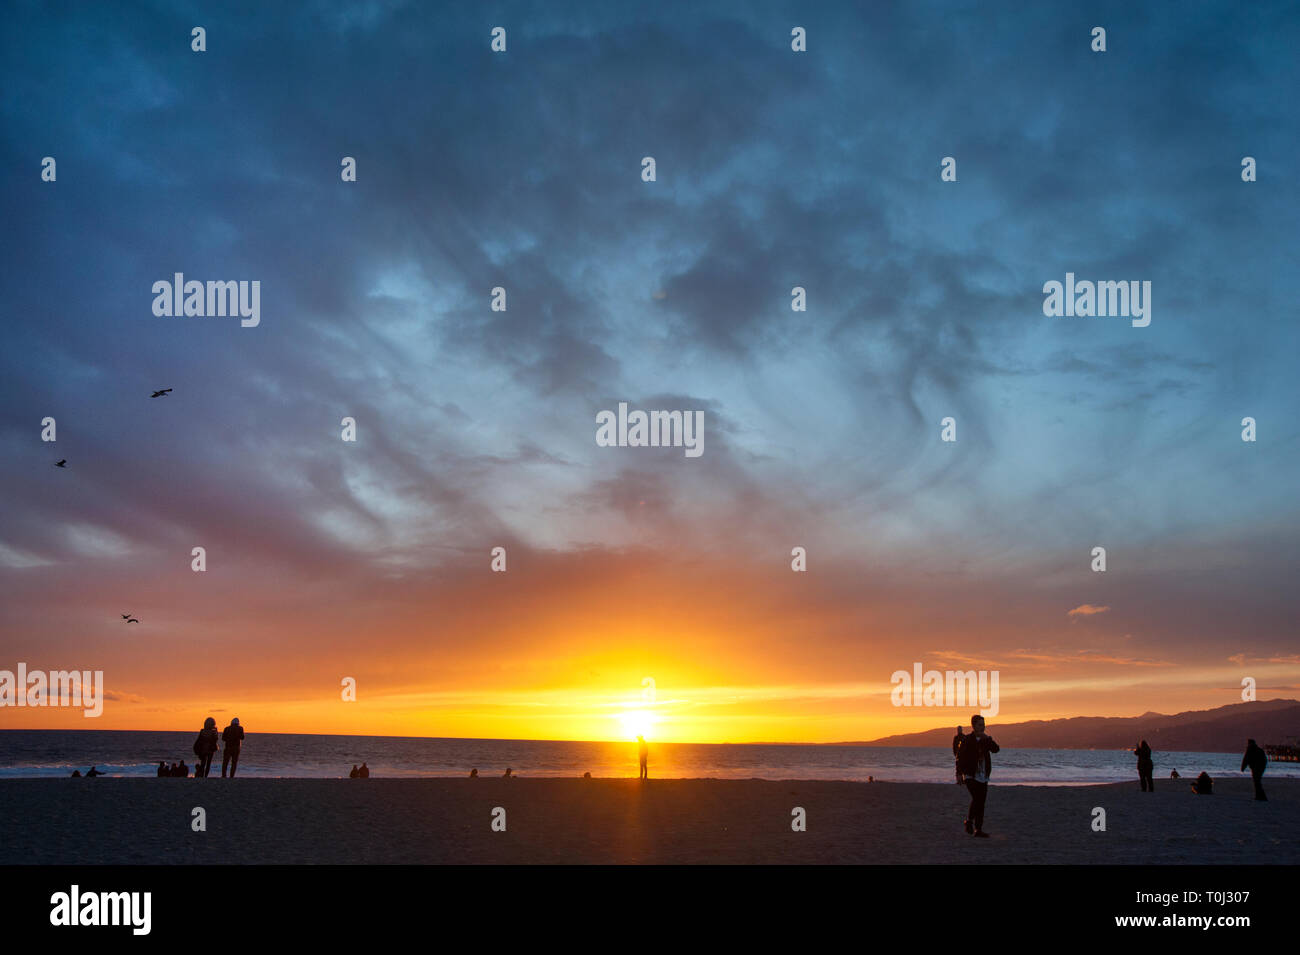 People on the beachat sunset in Santa Monica, CA Stock Photo